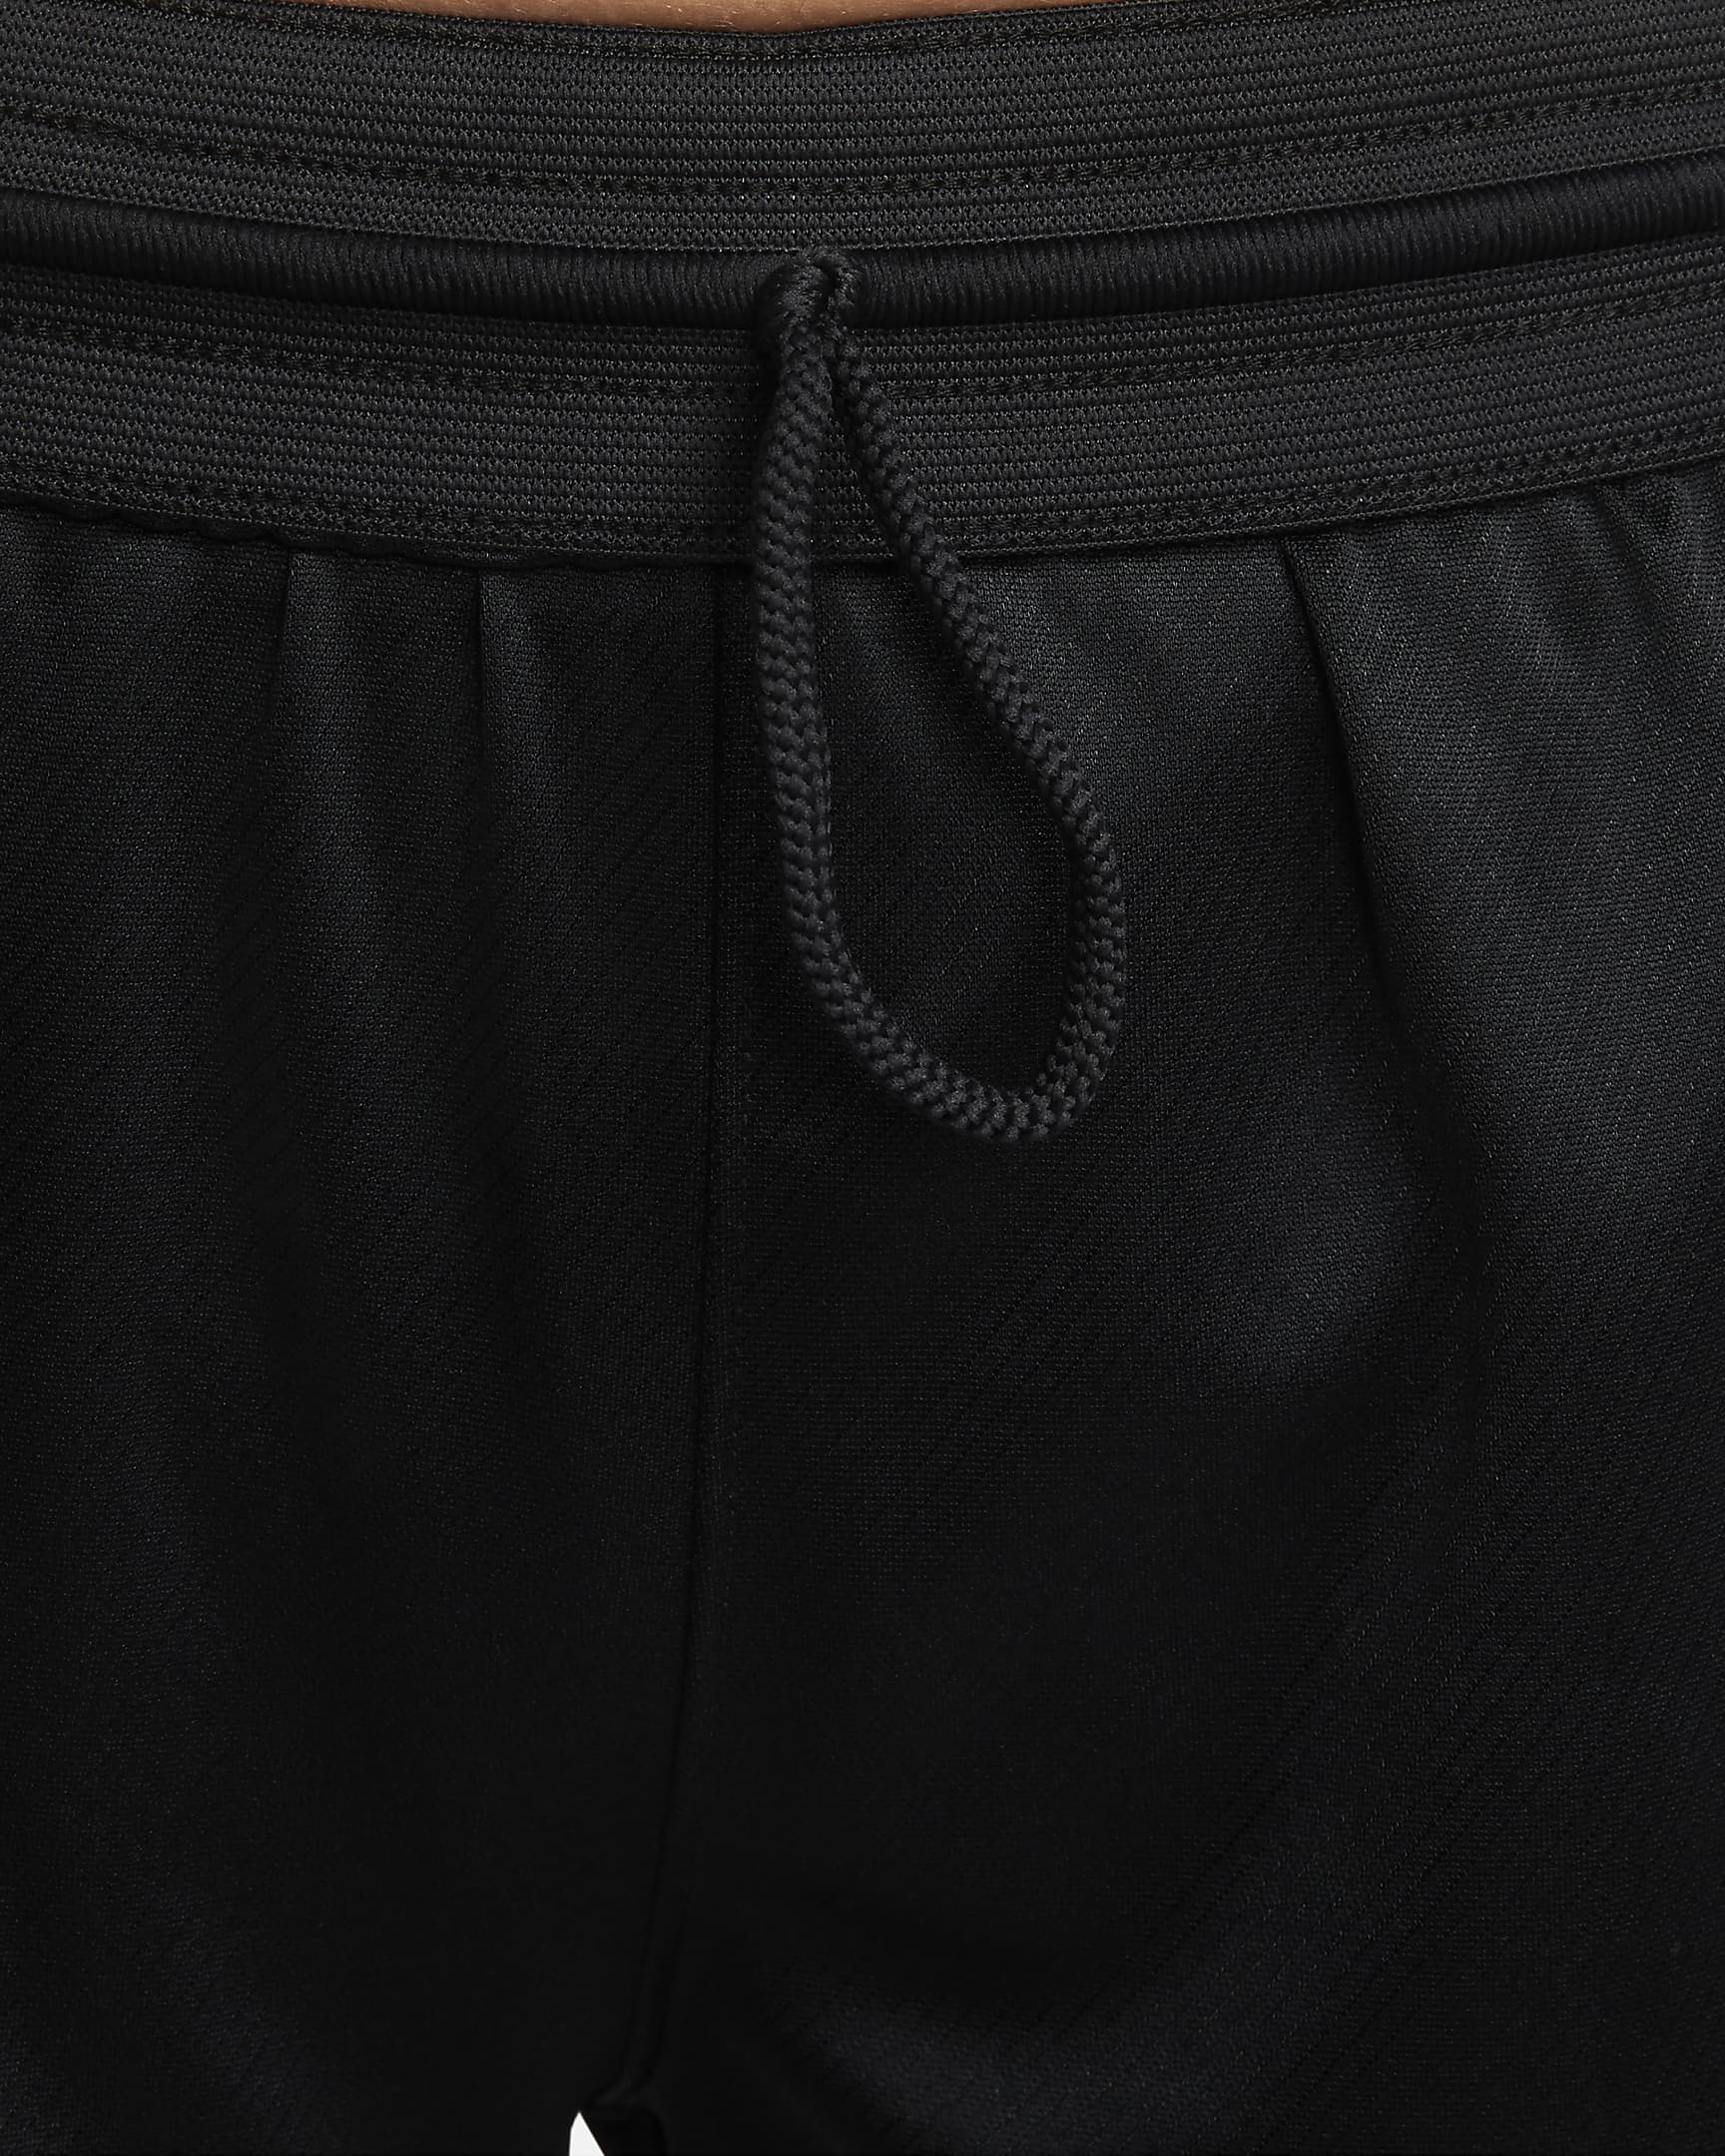 Nike Dri-FIT ISoFly Women's Basketball Shorts - Black/Black/White